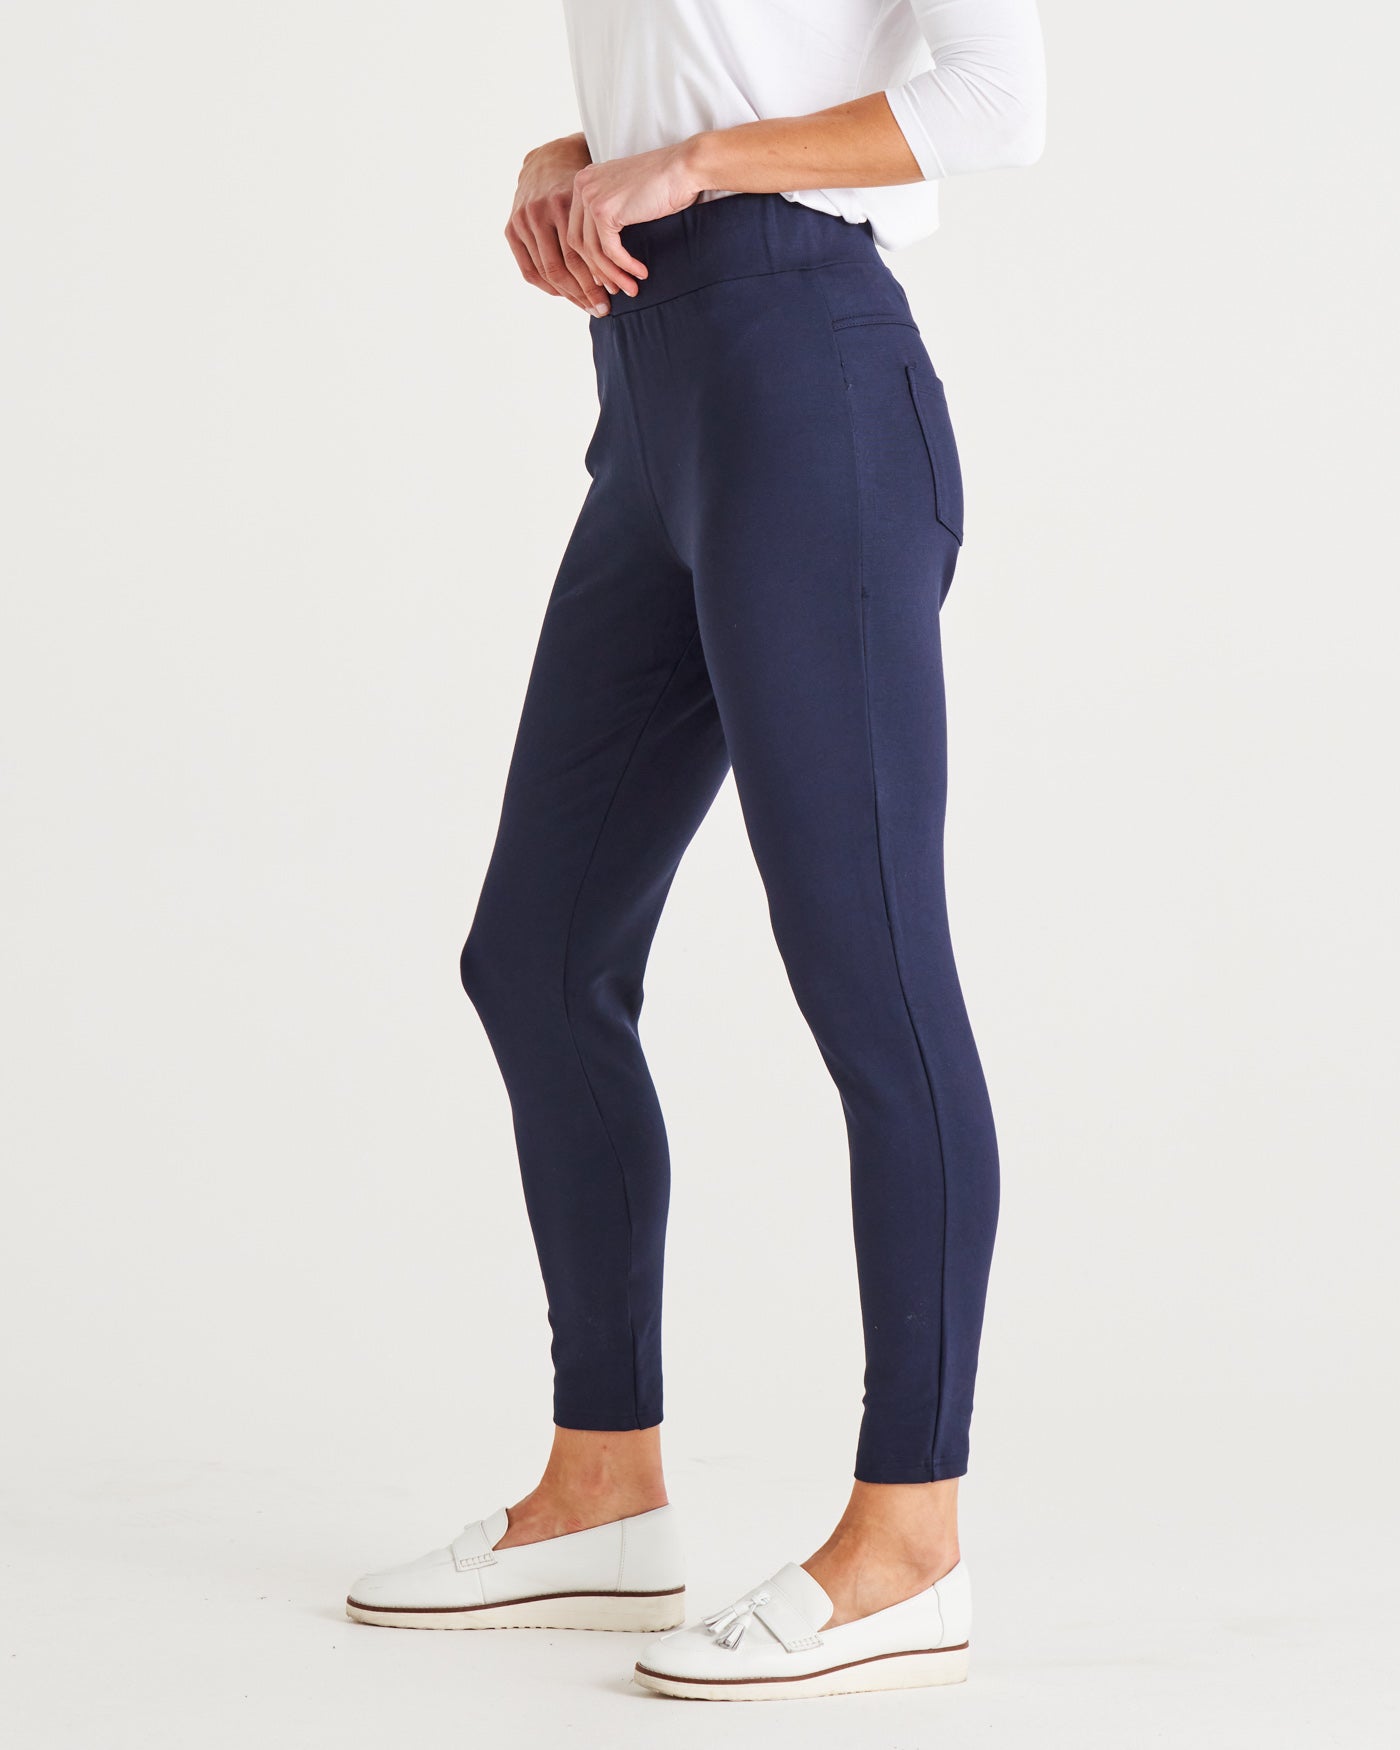 Royal Blue Viscose Ankle Legging  leggings for women – The Pajama